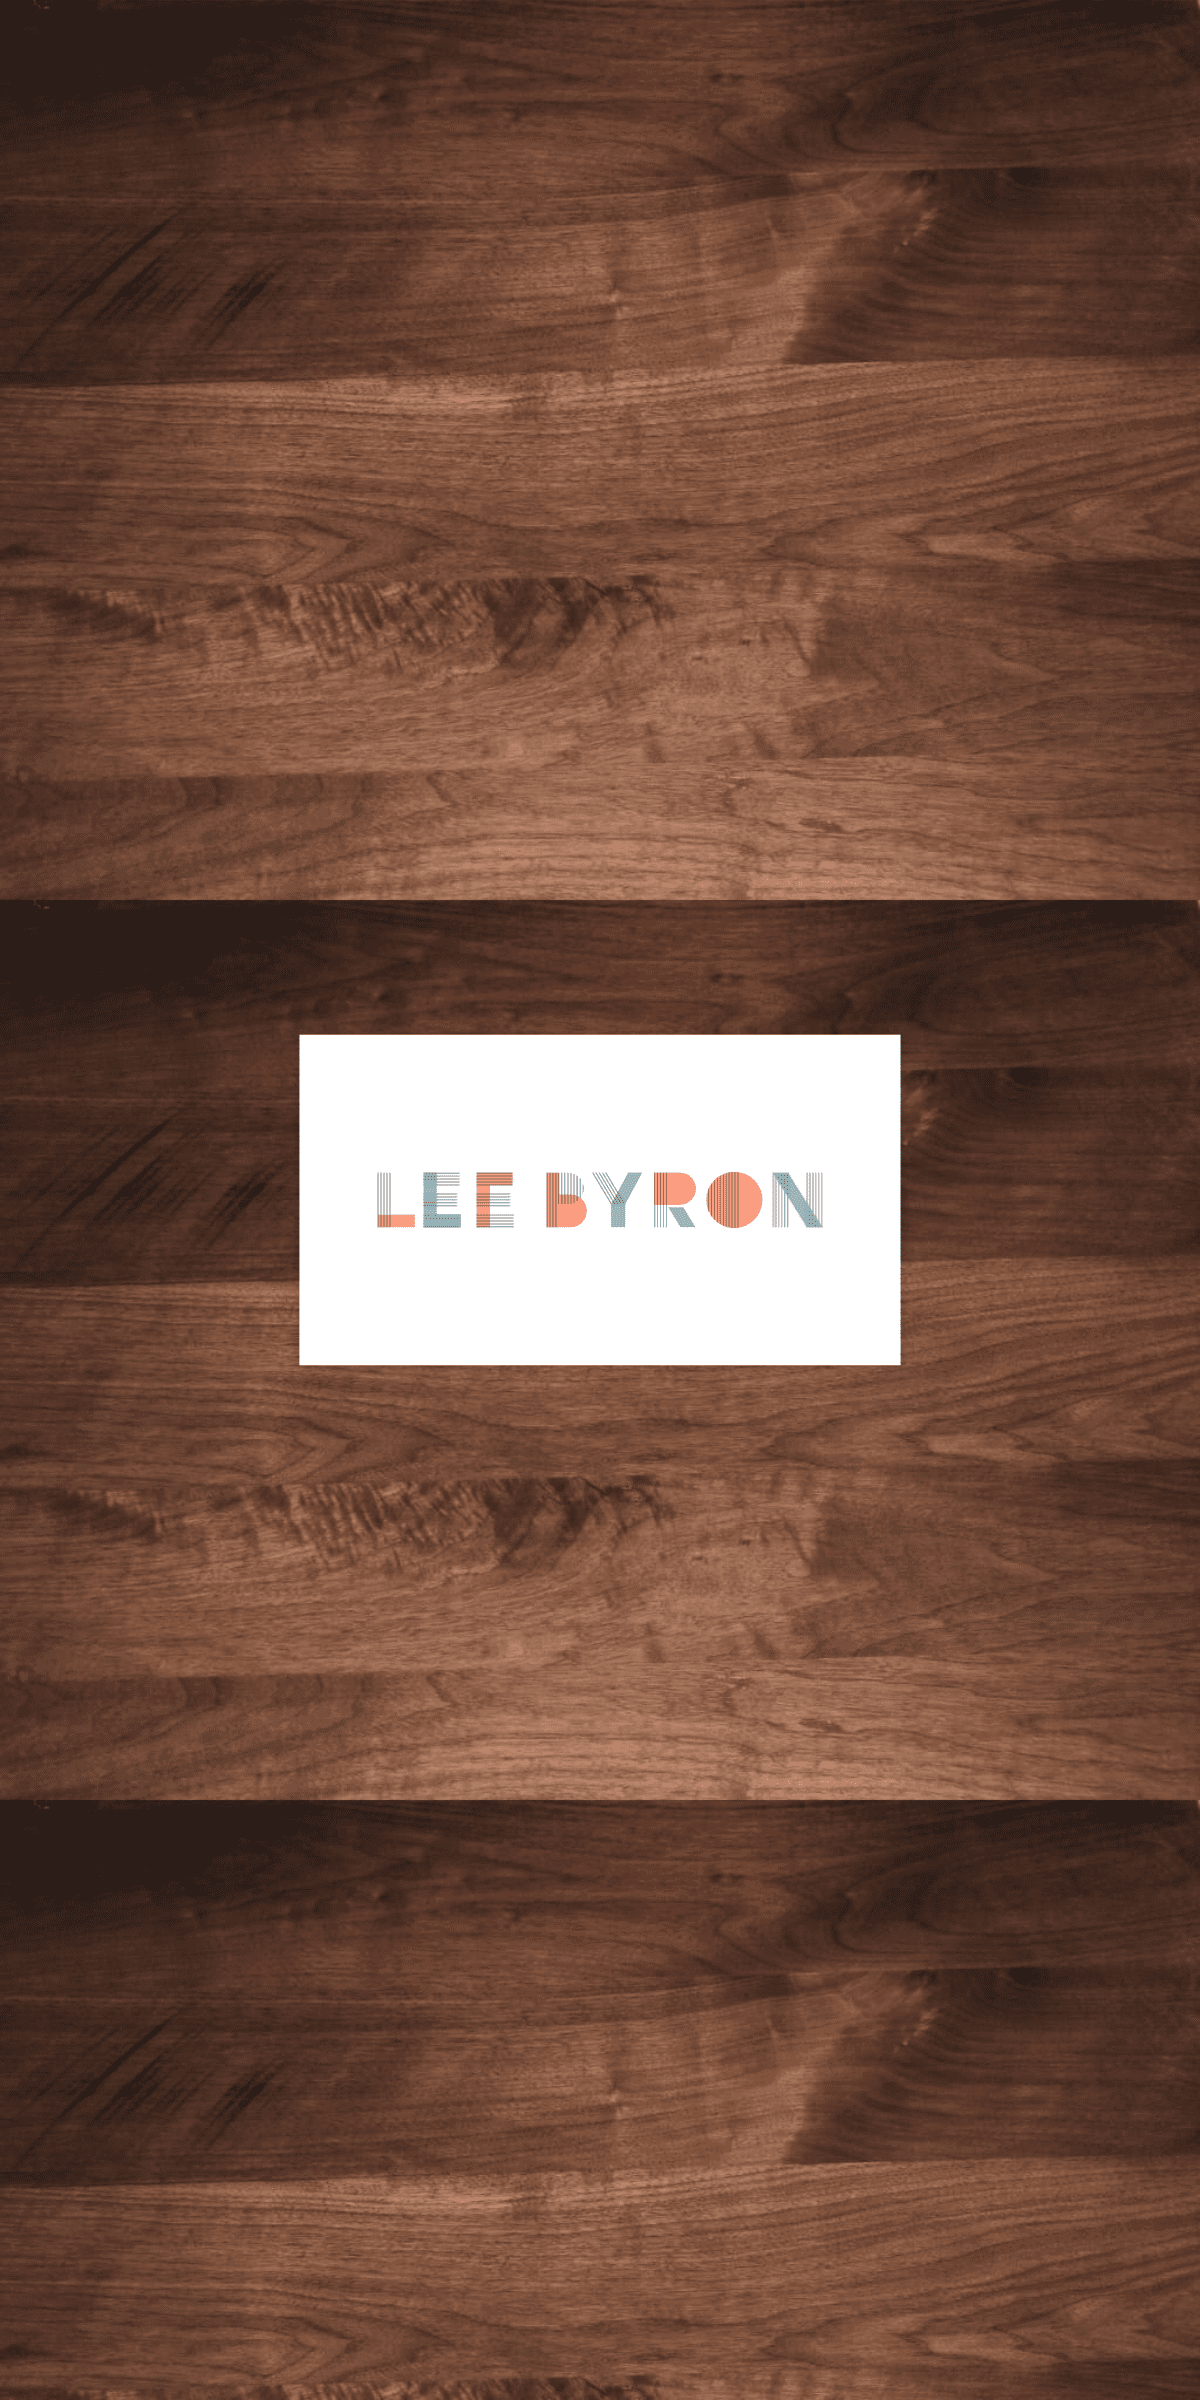 A complete backup of leebyron.com